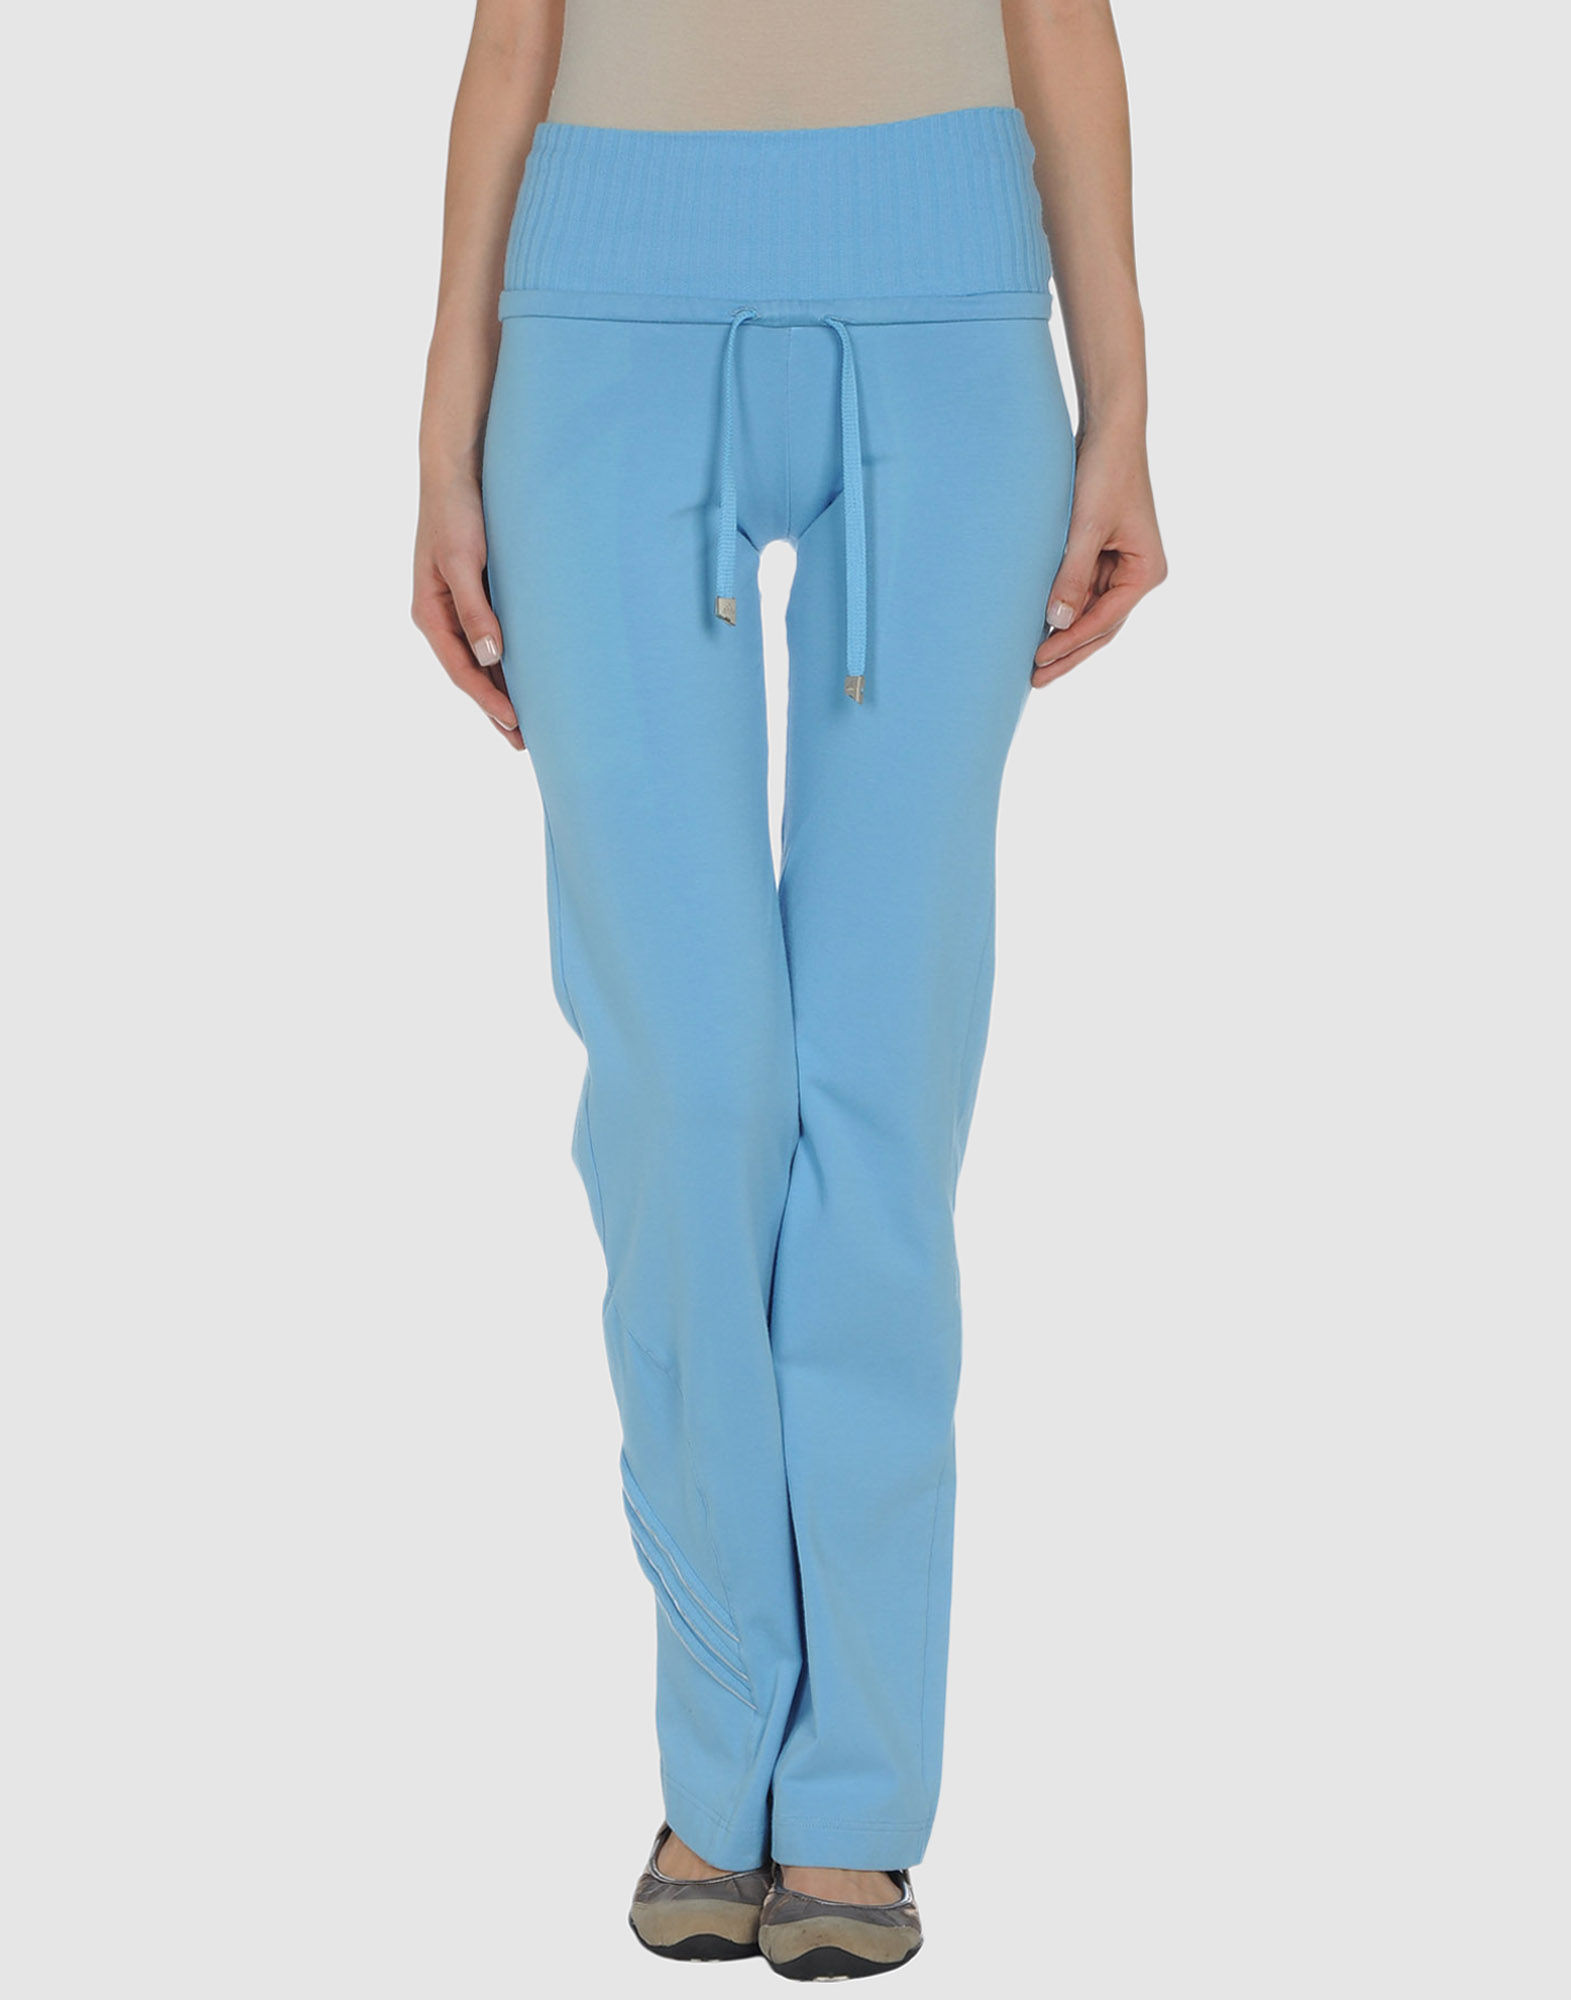 adidas Originals Cotton Sweat Pants in Sky Blue (Blue) - Lyst